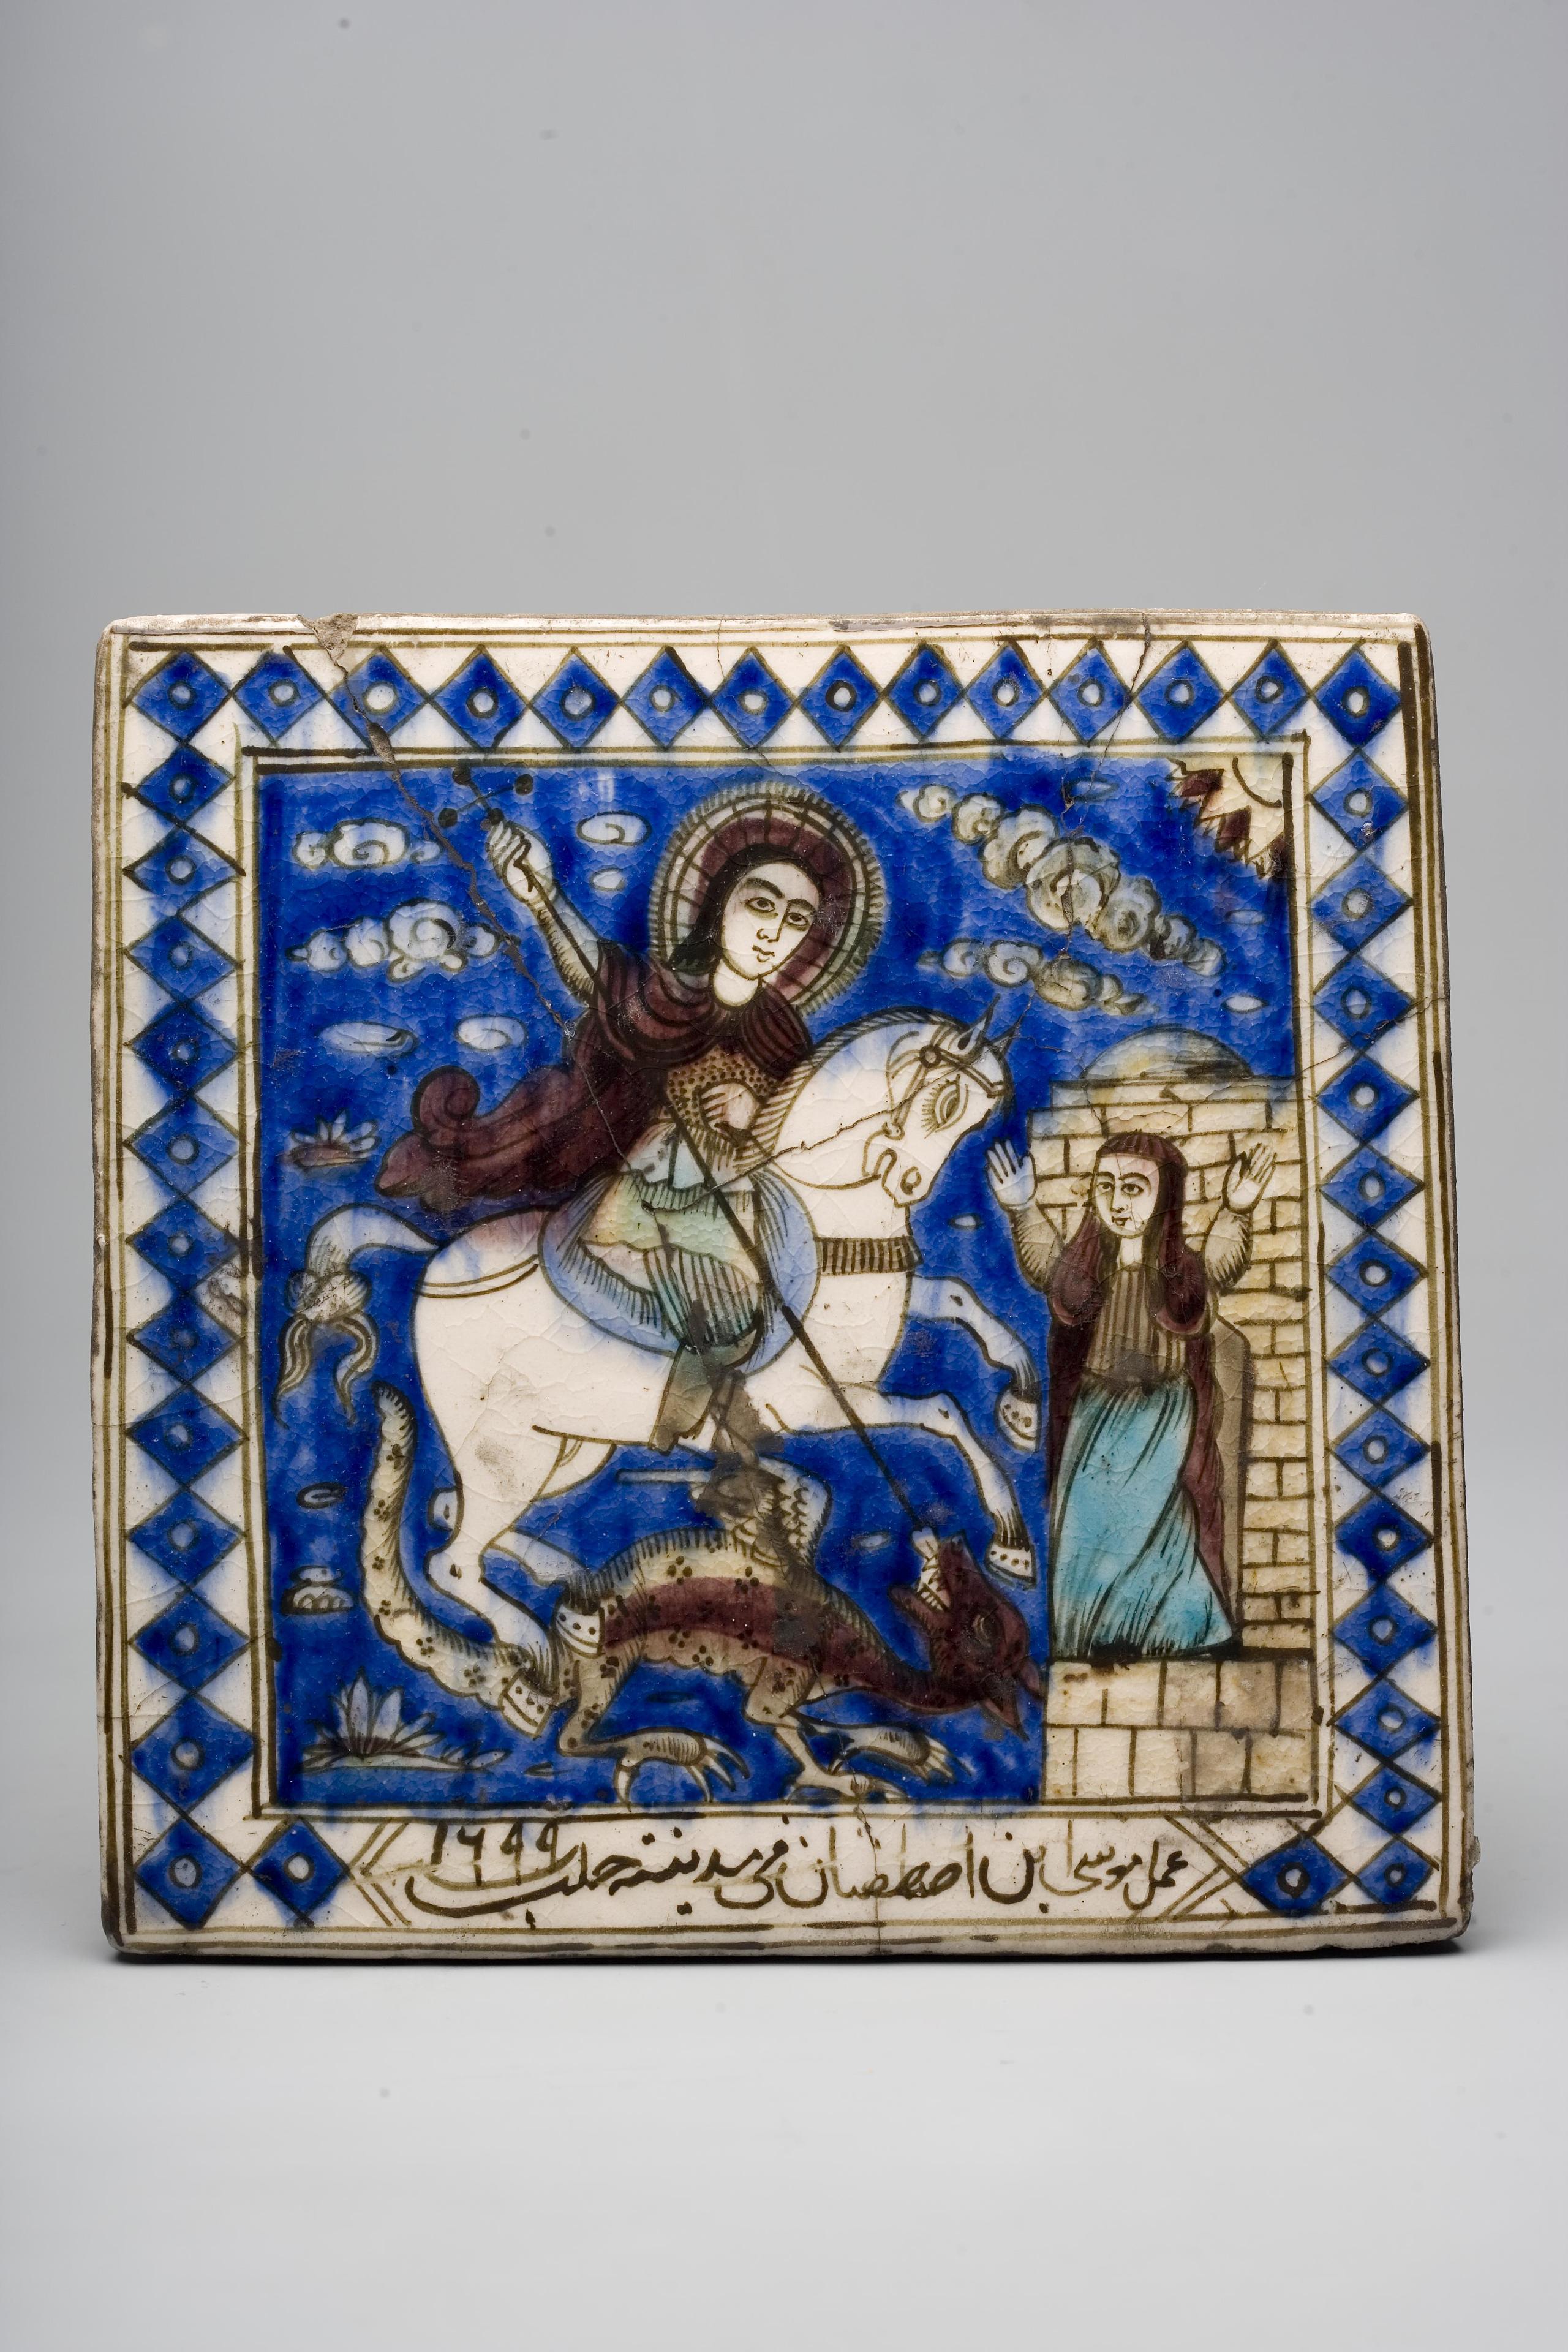 Izrazets, Syria, 1699, ceramics, engobe, painting, glaze